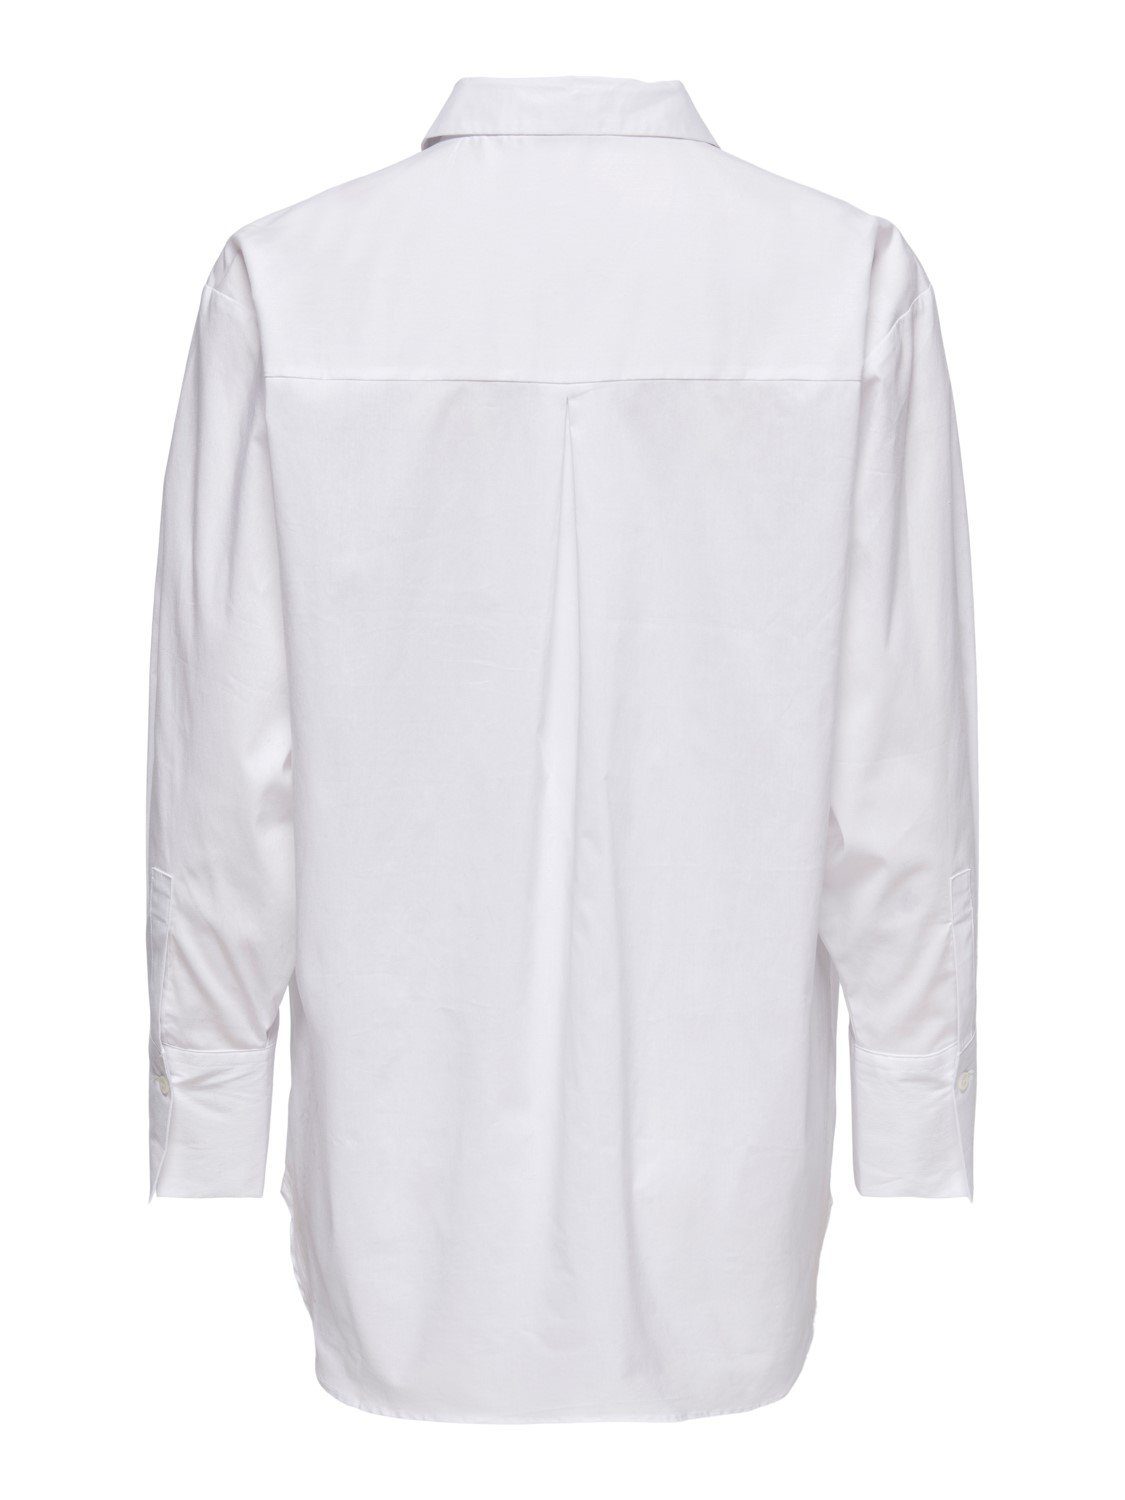 Shirt de JDY JACQUELINE Hemd in 3699 YONG Bluse Weiß Freizeit Design Blusenshirt (1-tlg)